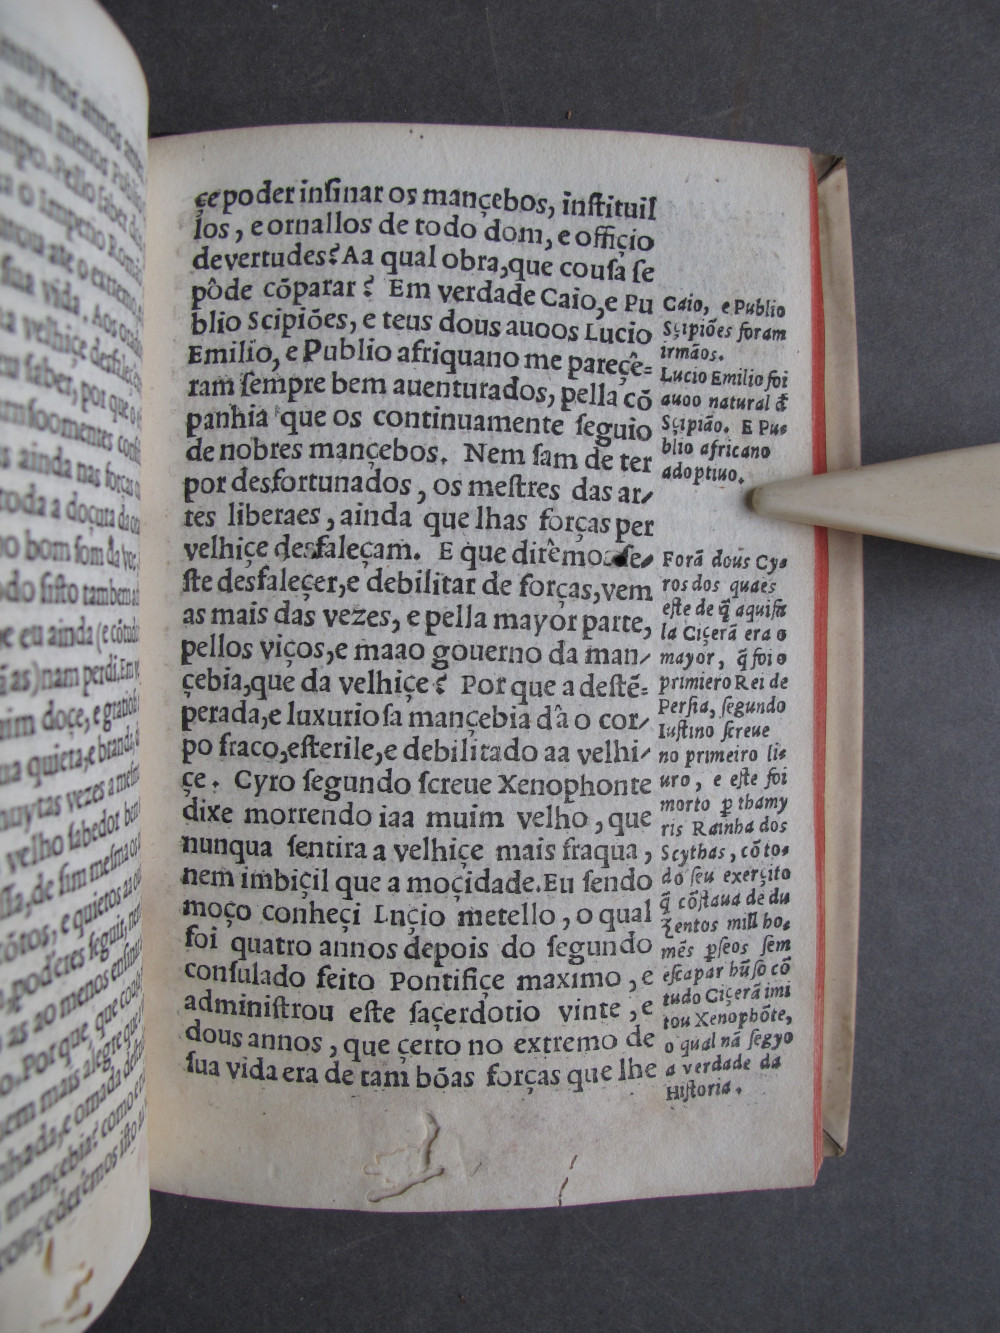 Folio B8 recto